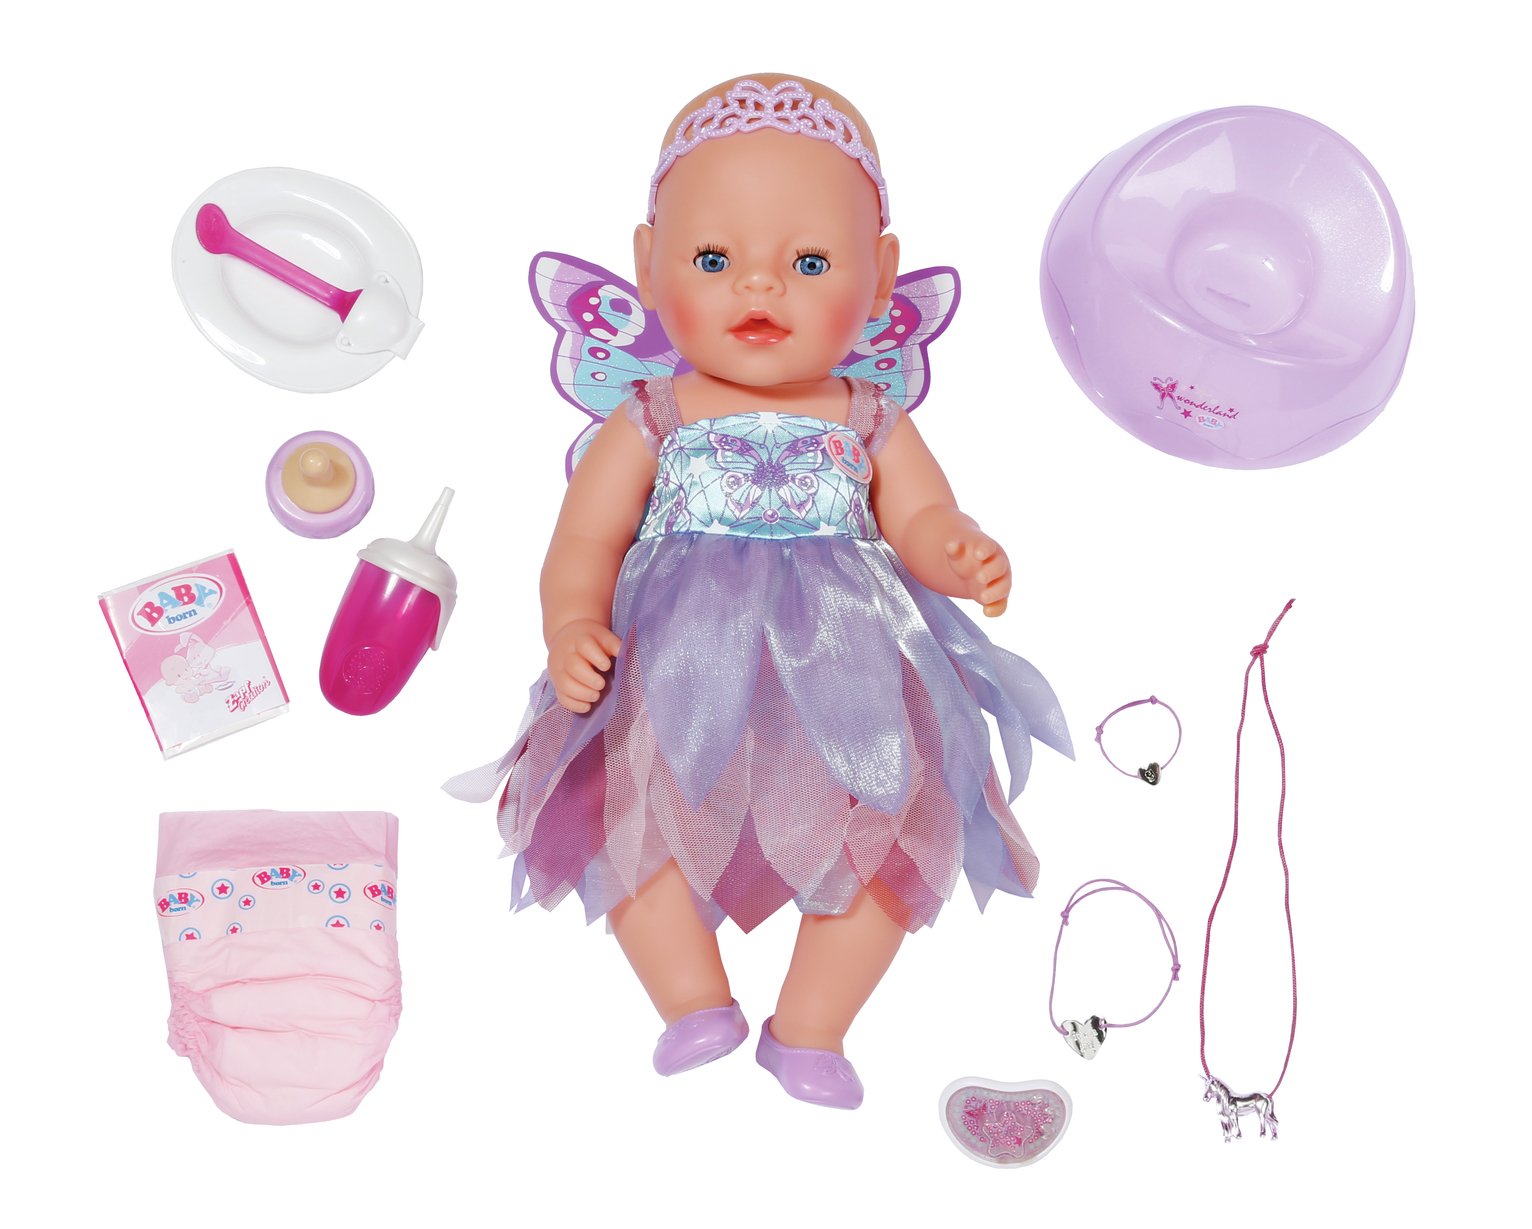 baby born accessories argos